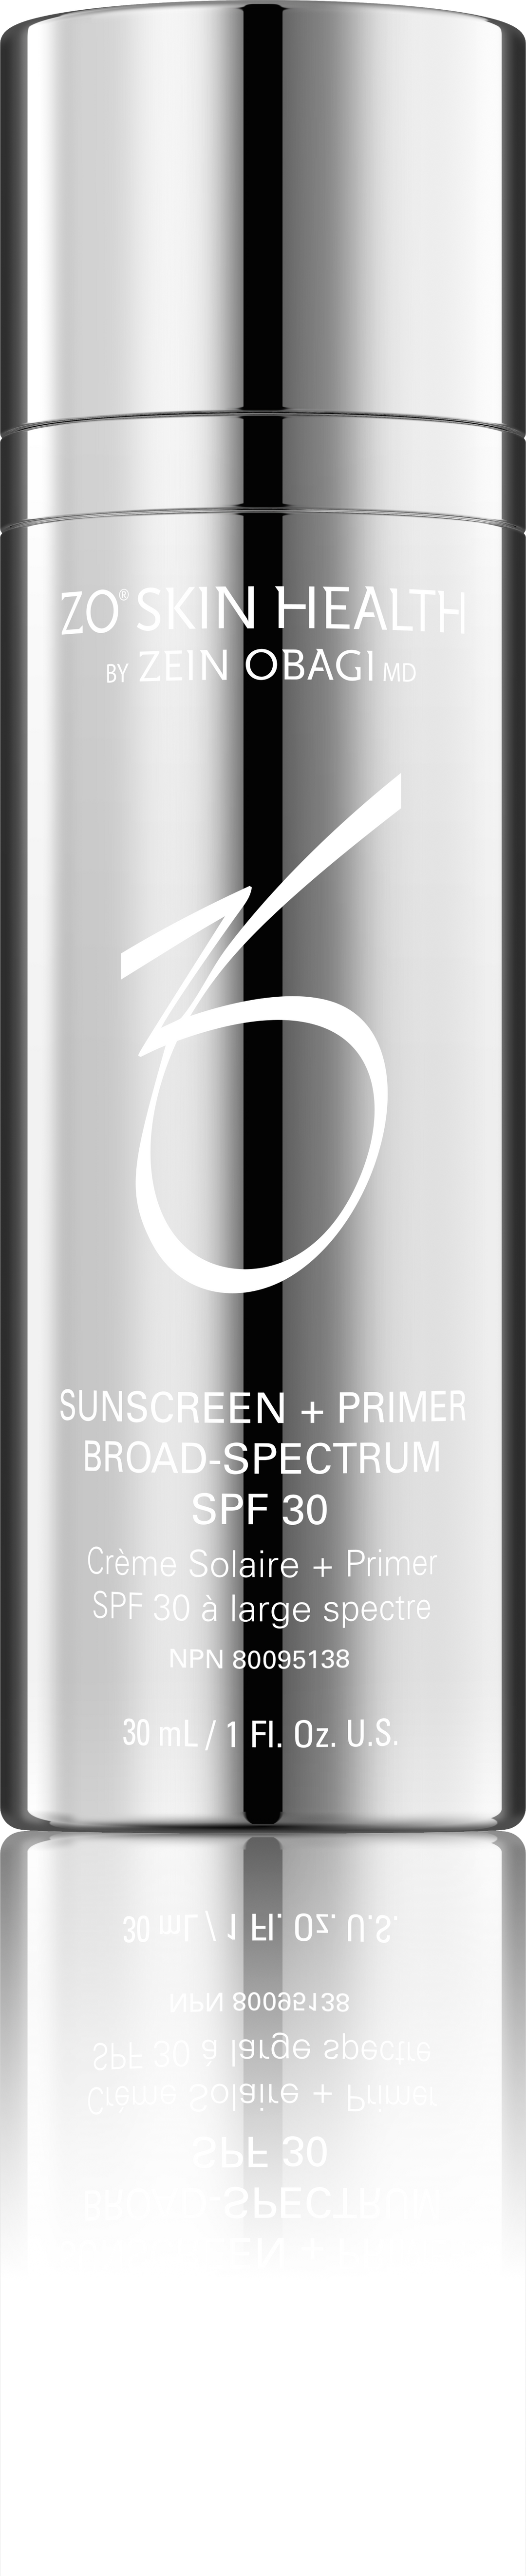 Sunscreen + Primer Broad-Spectrum SPF 30